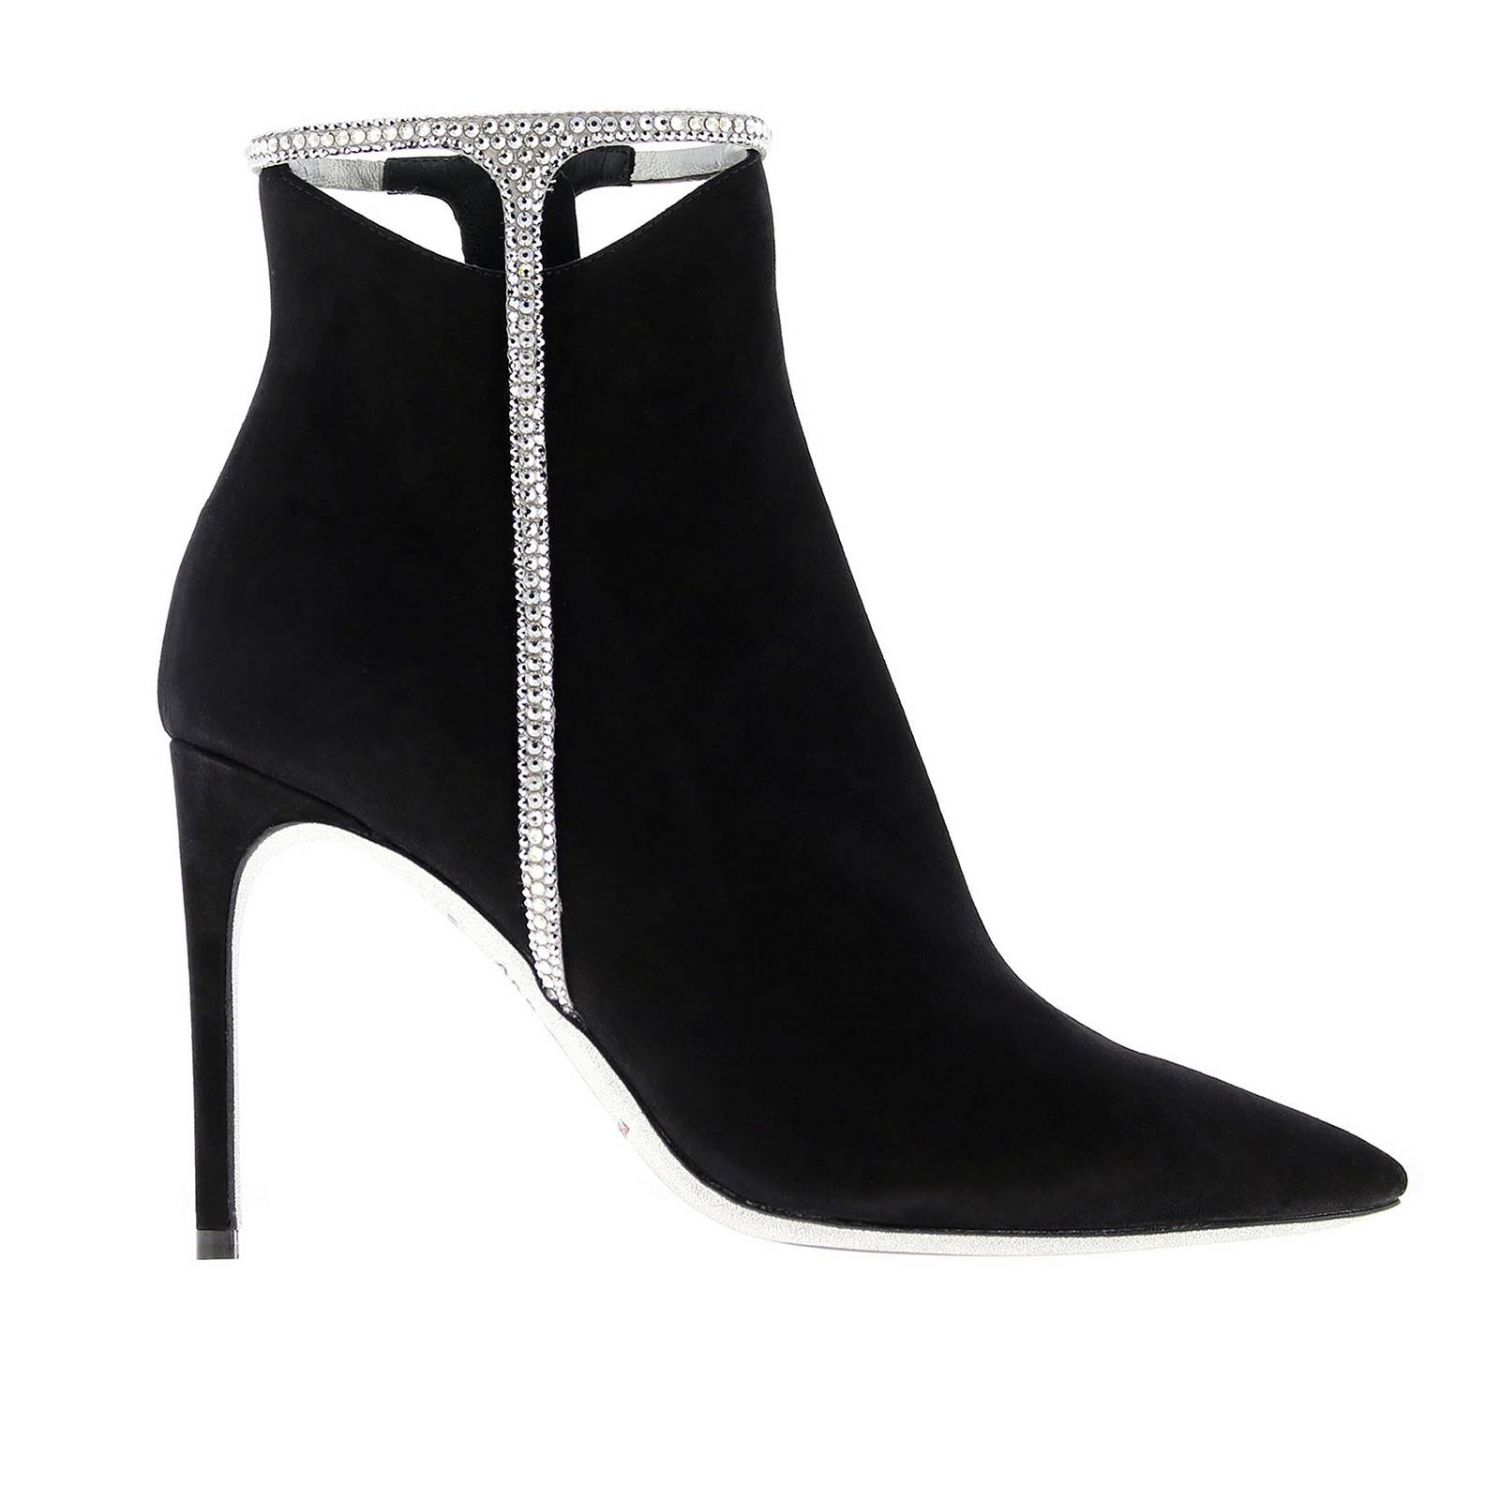 Rene Caovilla Outlet: Shoes women - Black | Heeled Booties Rene ...